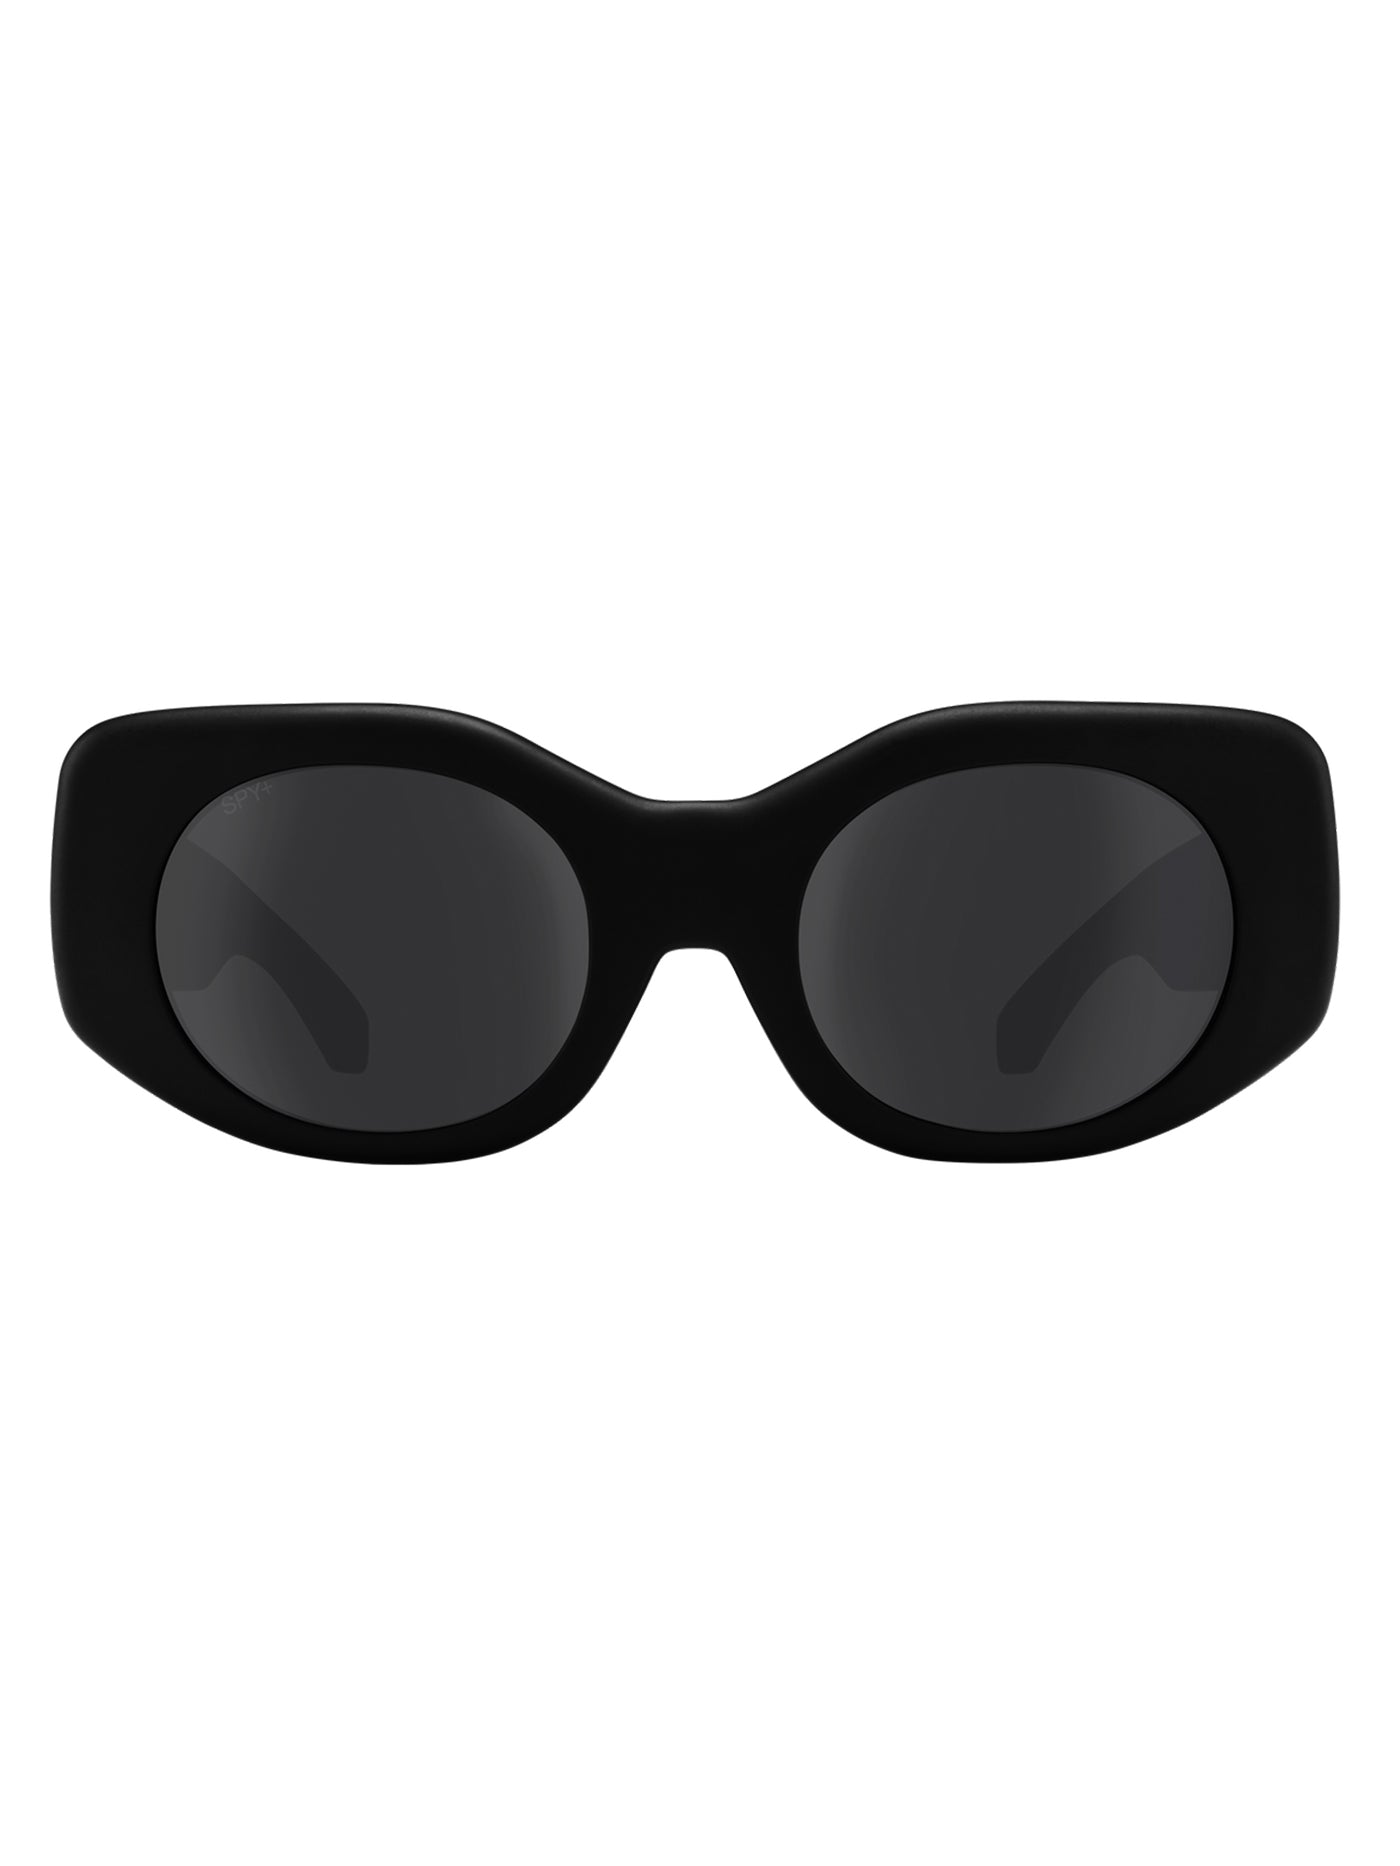 Spy Optic Hangout Matte Black Sunglasses